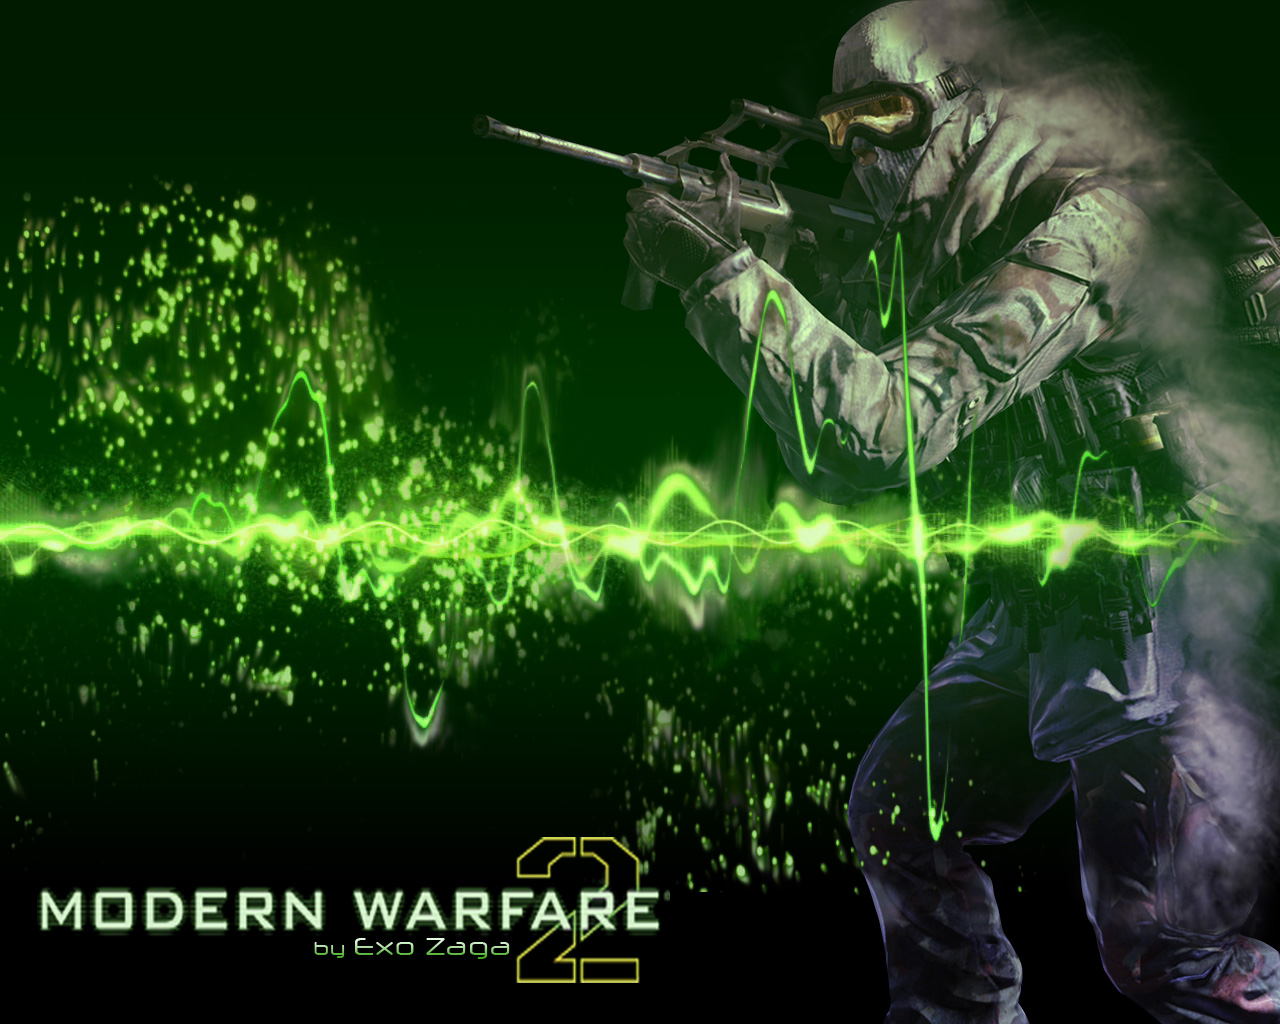 Cyber Game Wallpaper Call Of Duty Modern Warfare HD